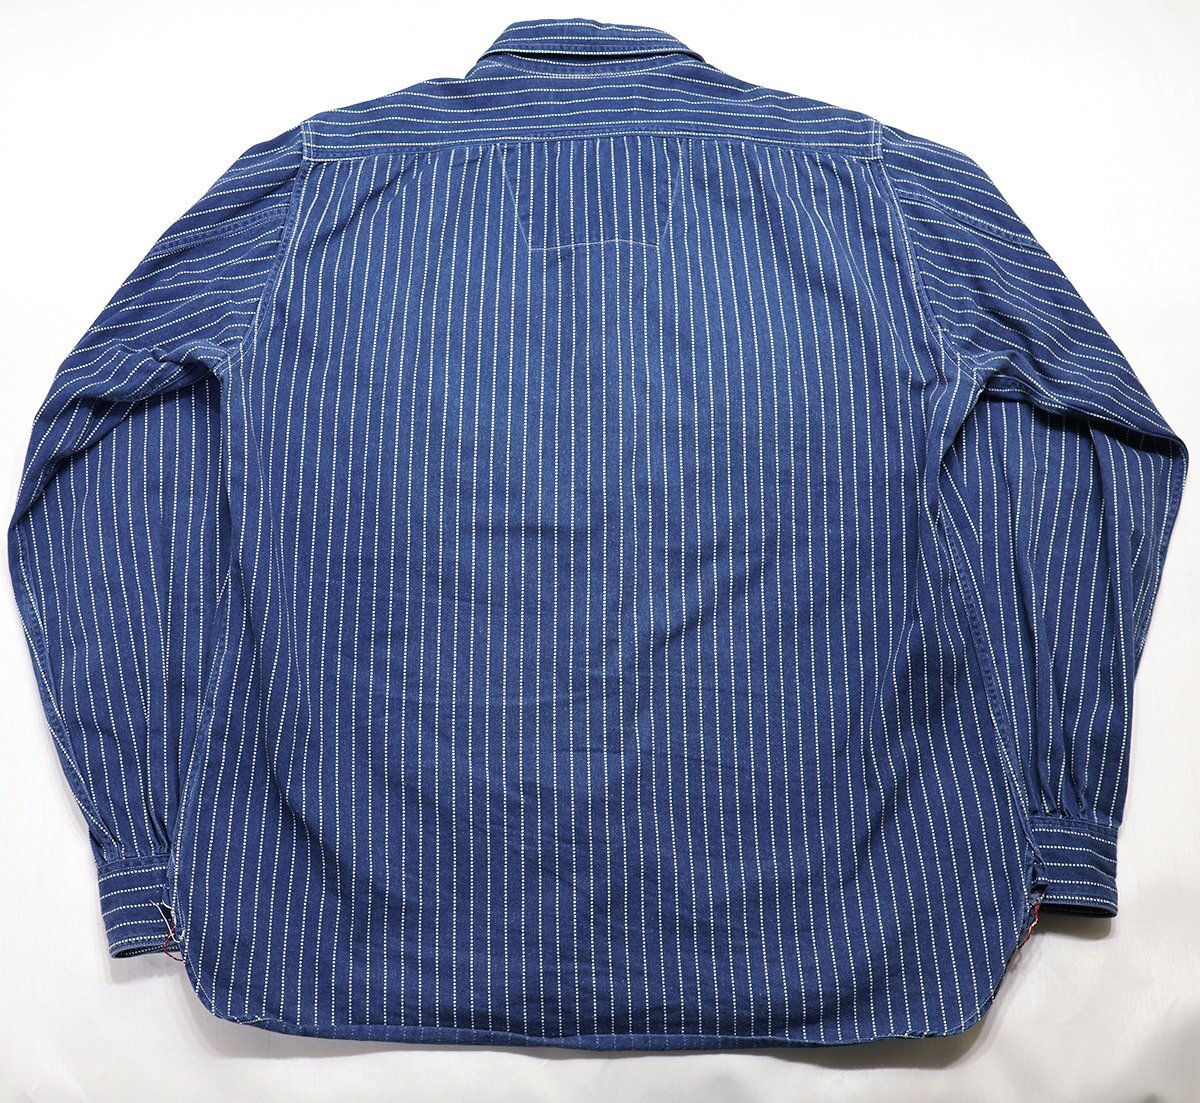 SugarCane (シュガーケーン) Wabash Stripe Work Shirt / ウォバッシュストライプ ワークシャツ sc25551 ネイビー size Mの画像2